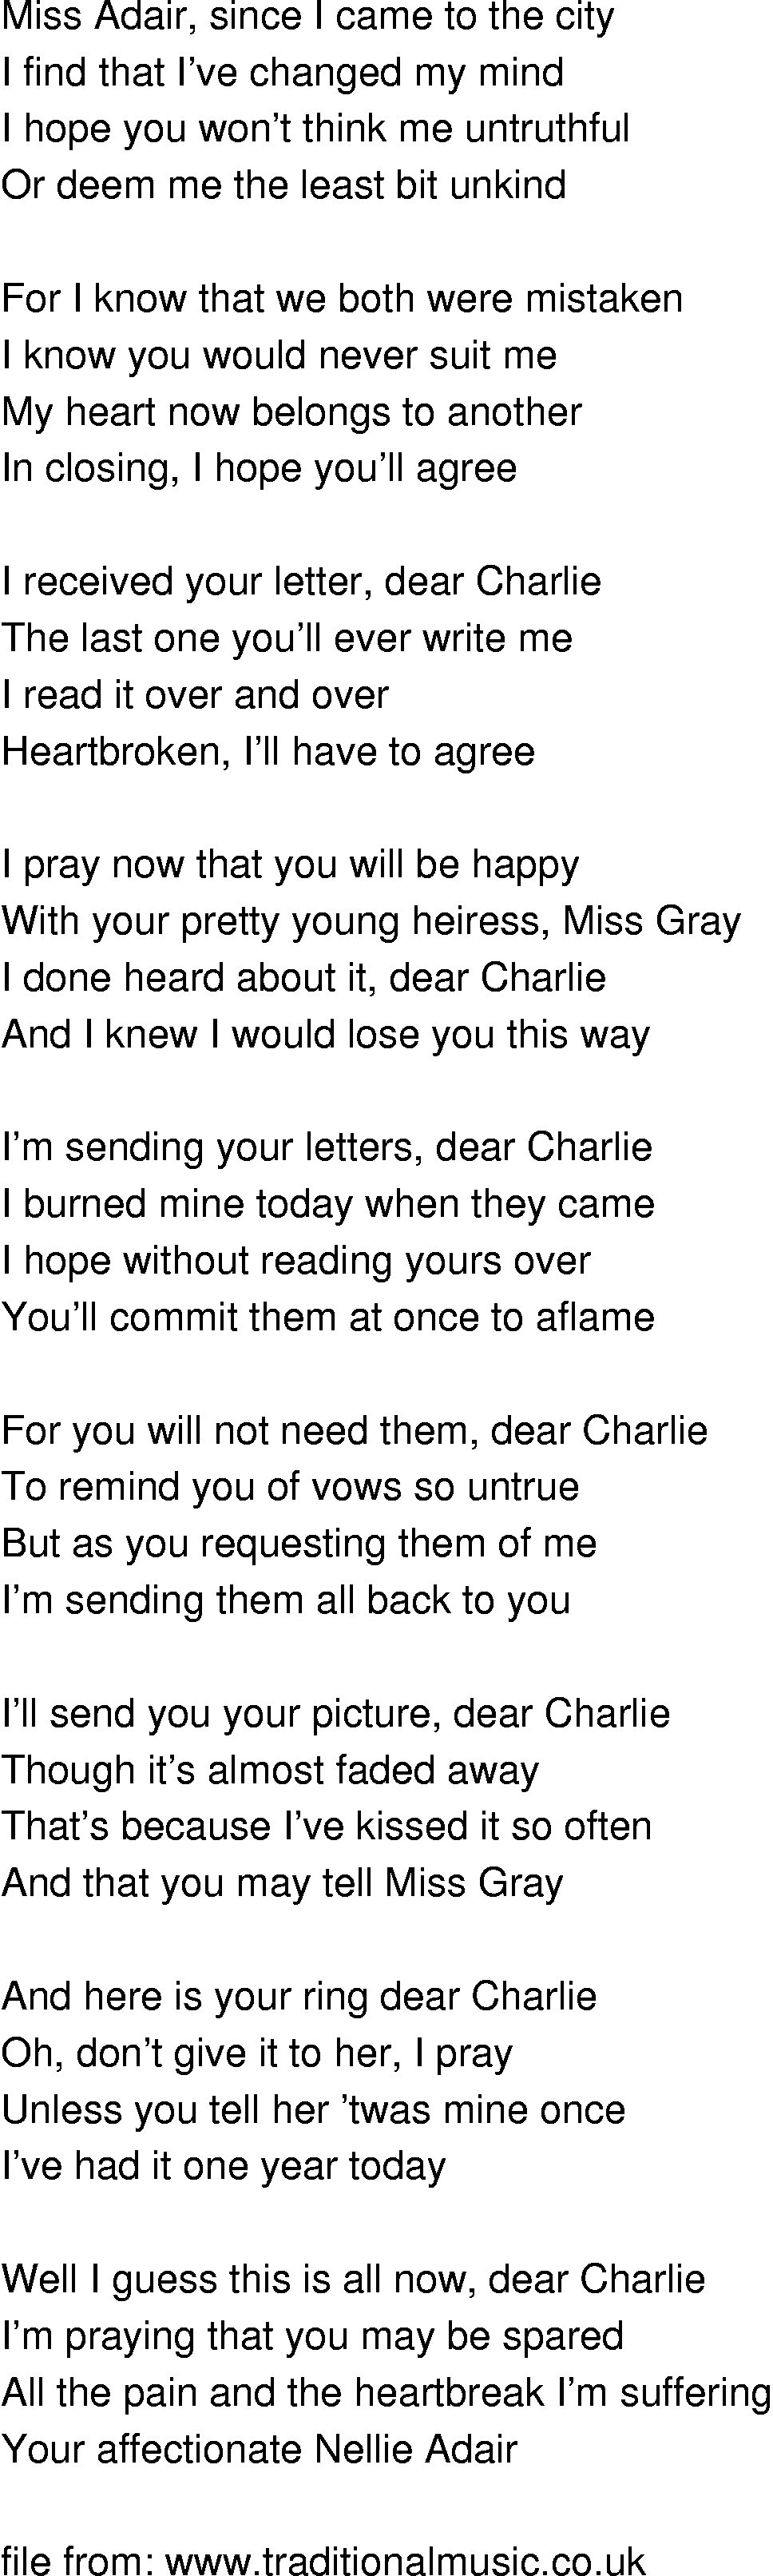 Old-Time (oldtimey) Song Lyrics - charlie brooks and nellie adair